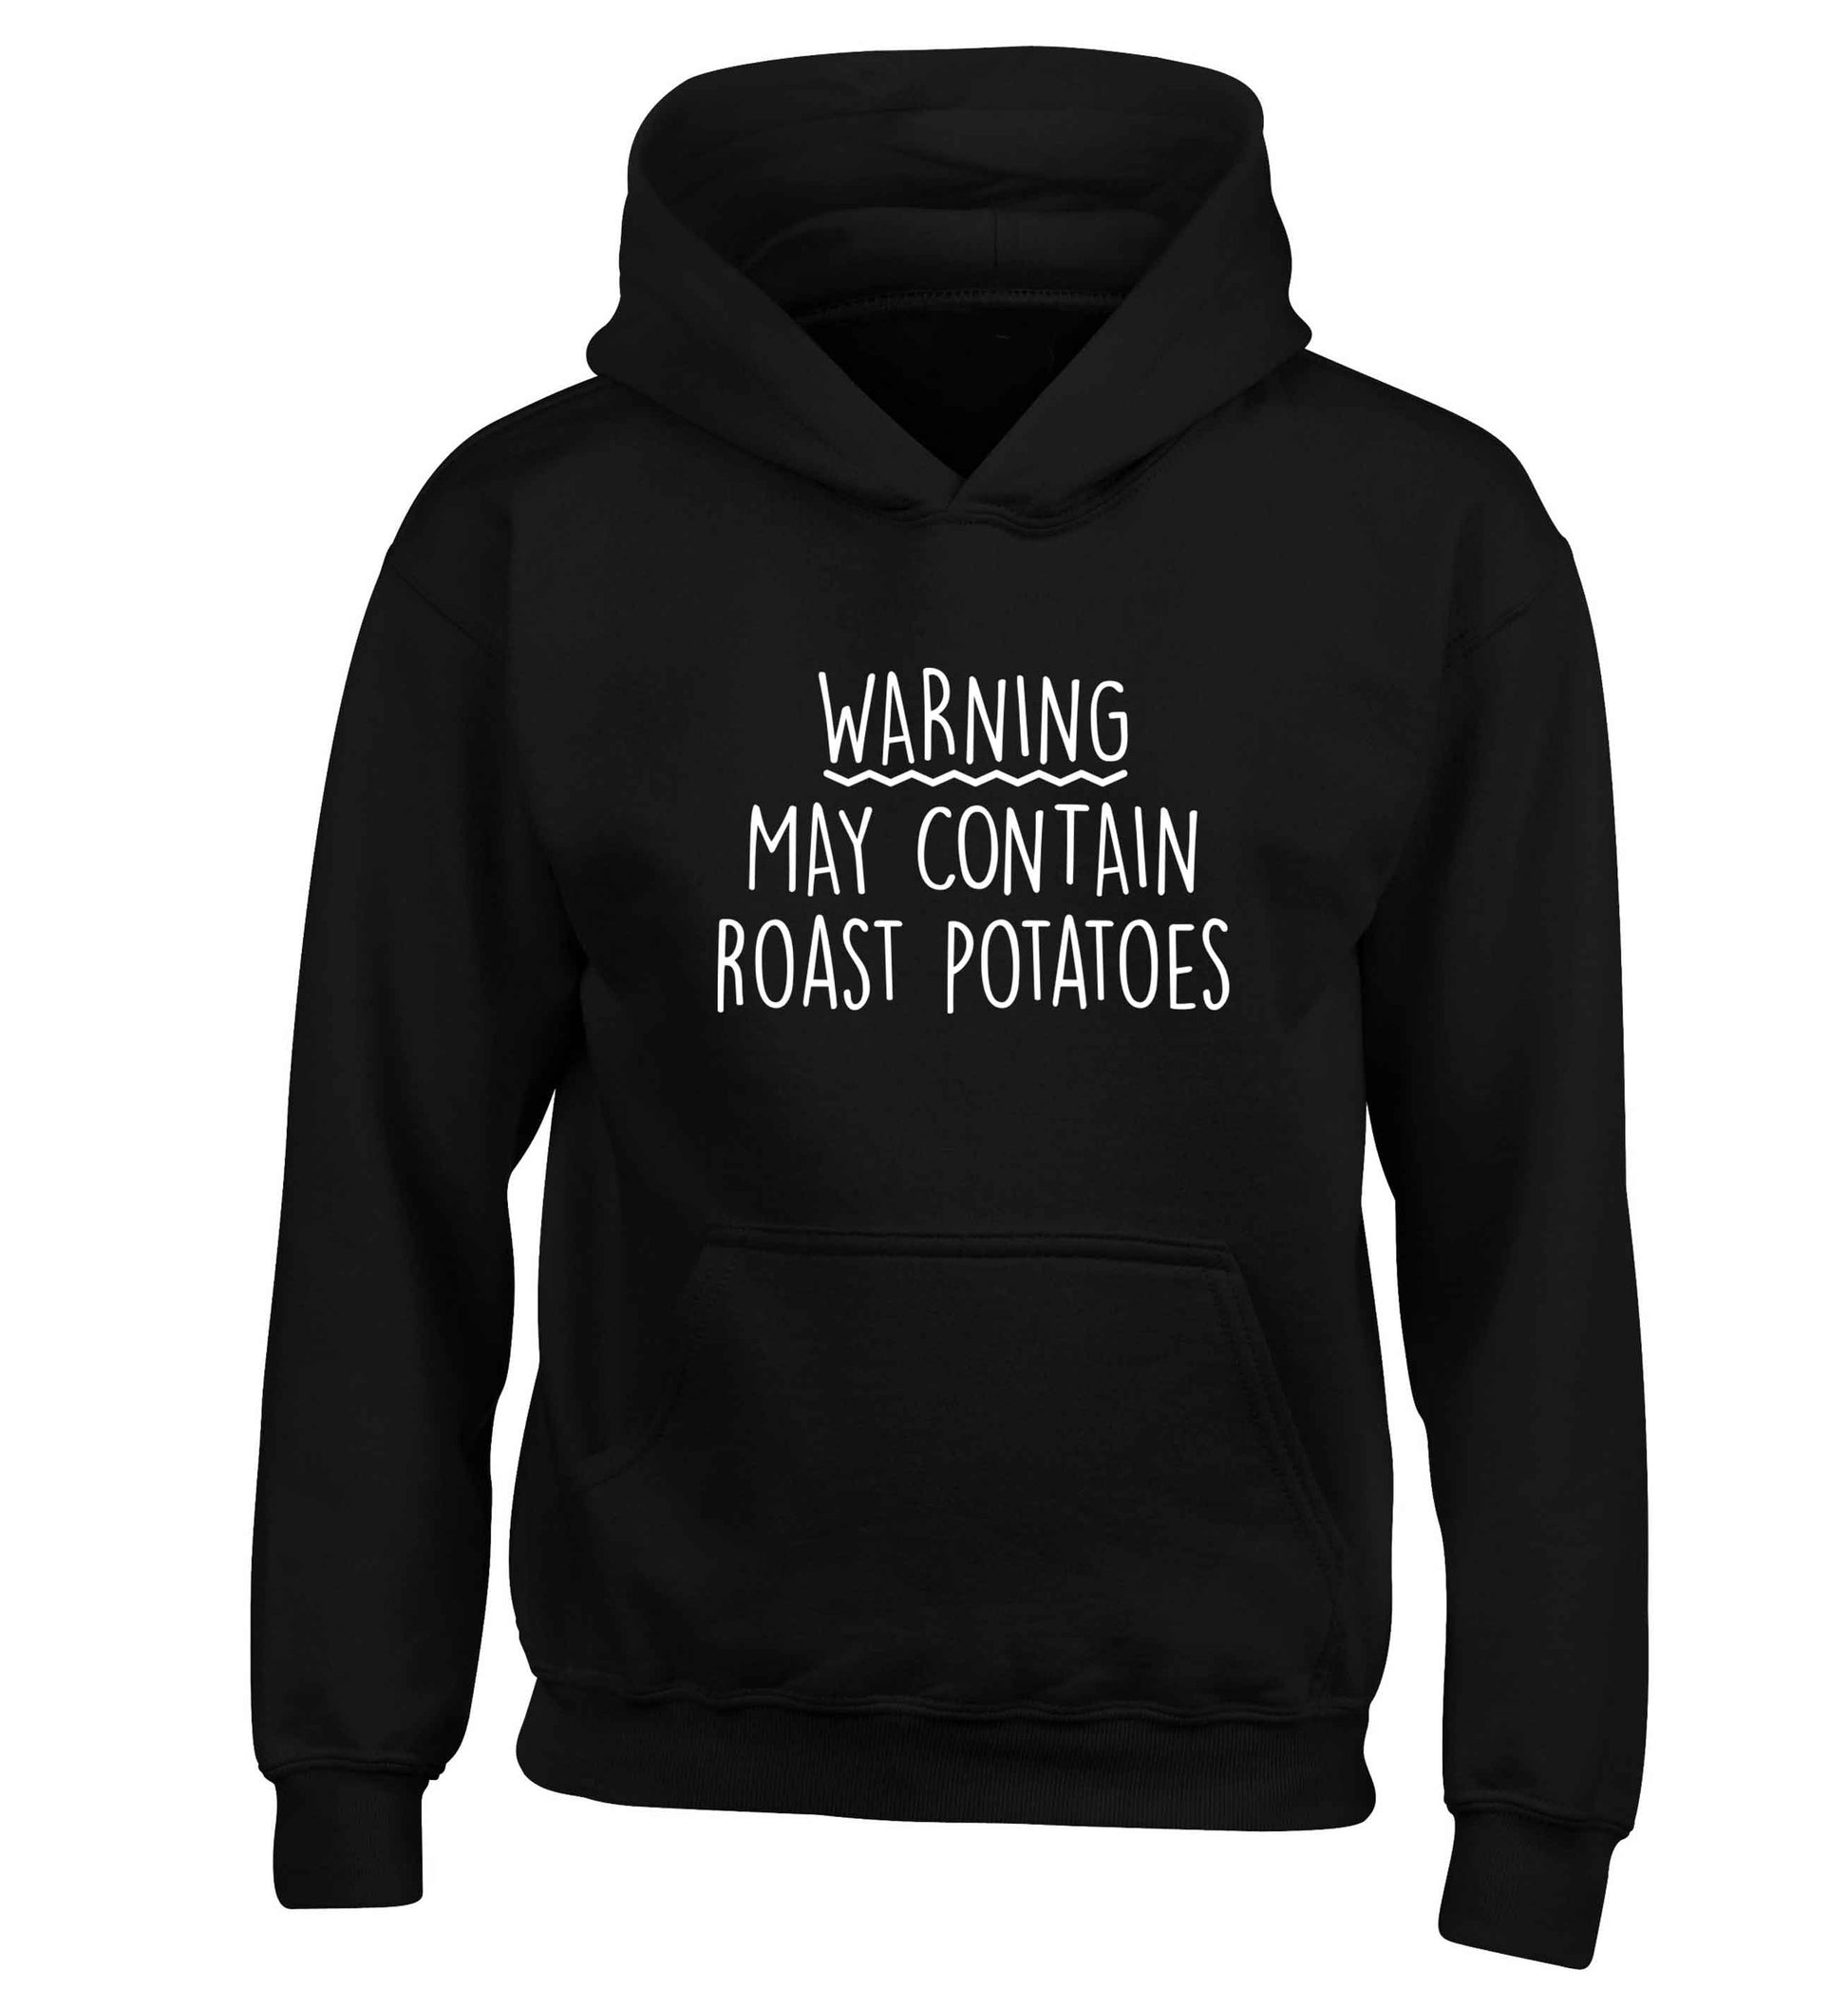 Warning may containg roast potatoes children's black hoodie 12-13 Years